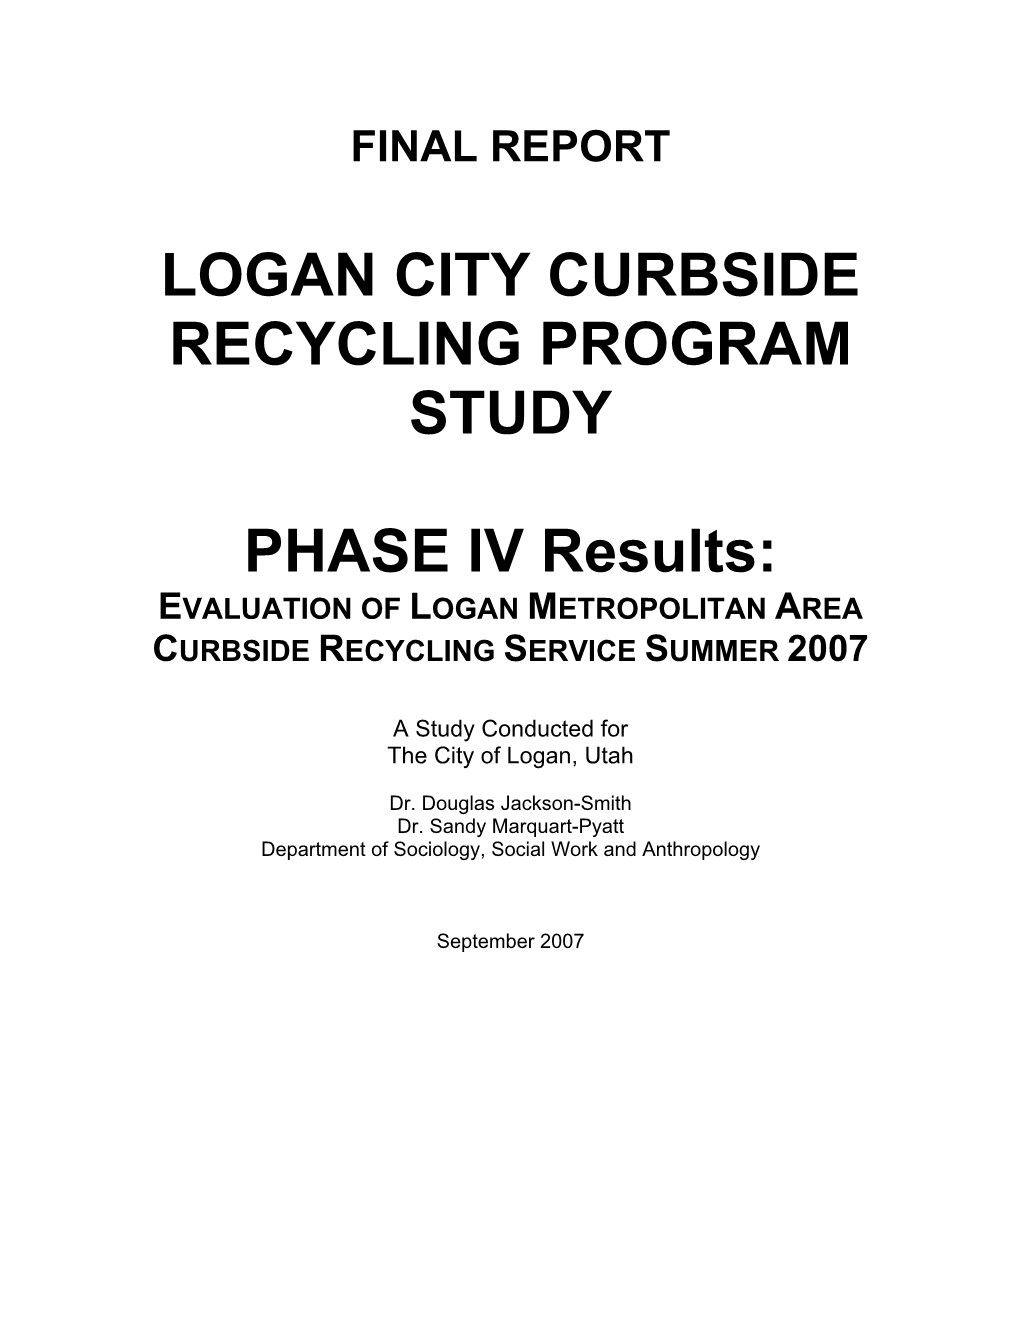 Logan City Curbside Recycling Program Study